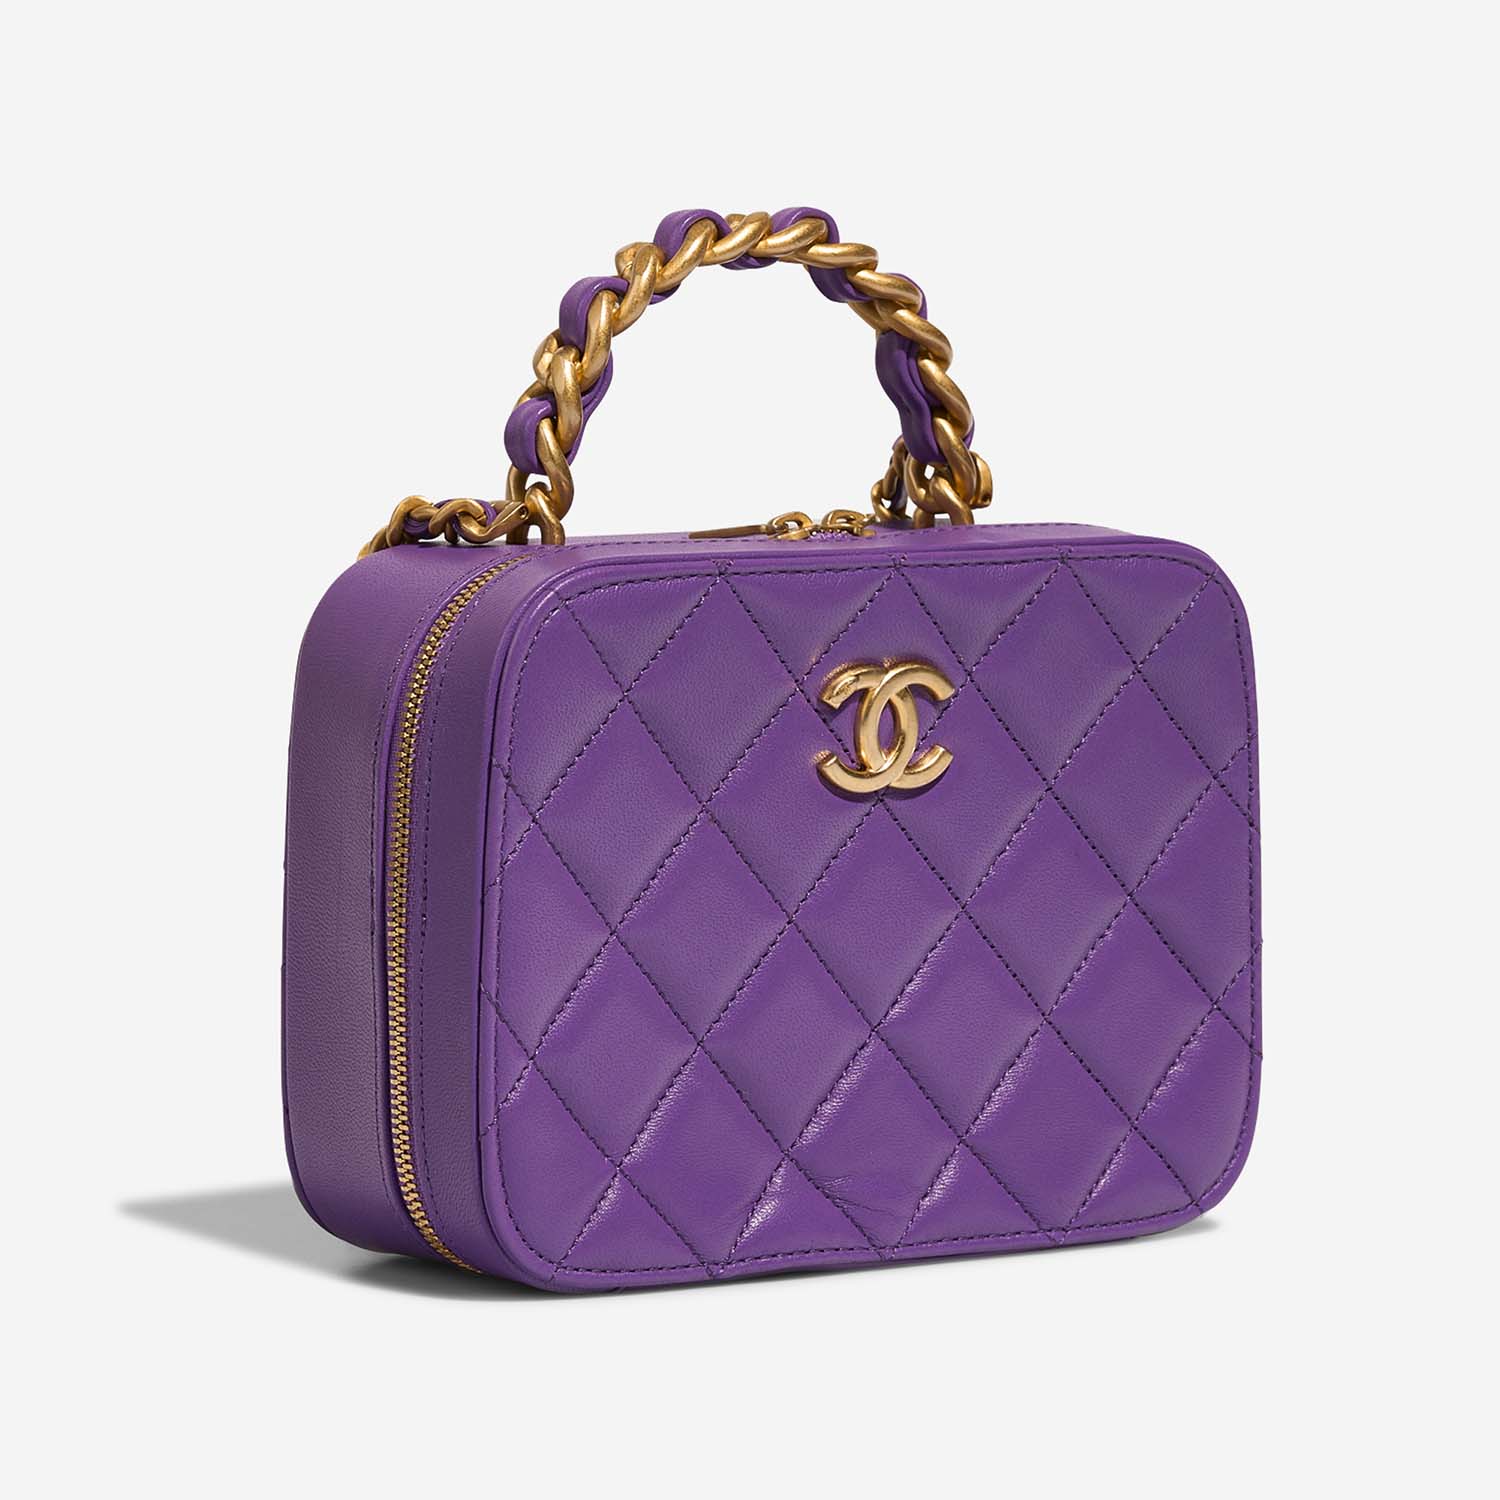 Chanel Vanity Small Violet Side Front  | Sell your designer bag on Saclab.com